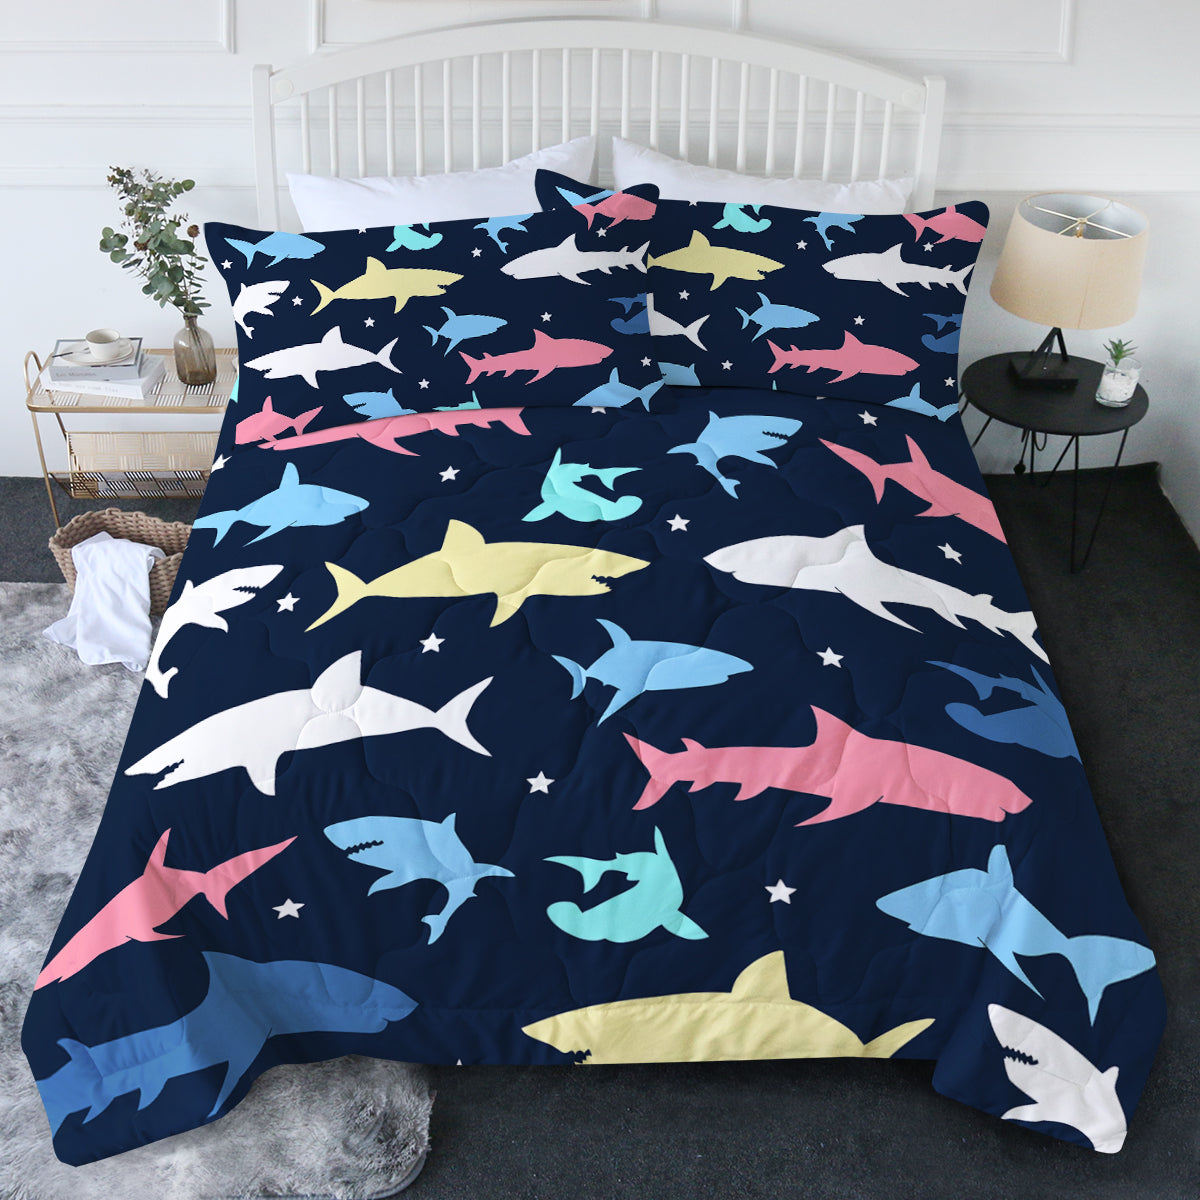 The Shark Disco Comforter Set